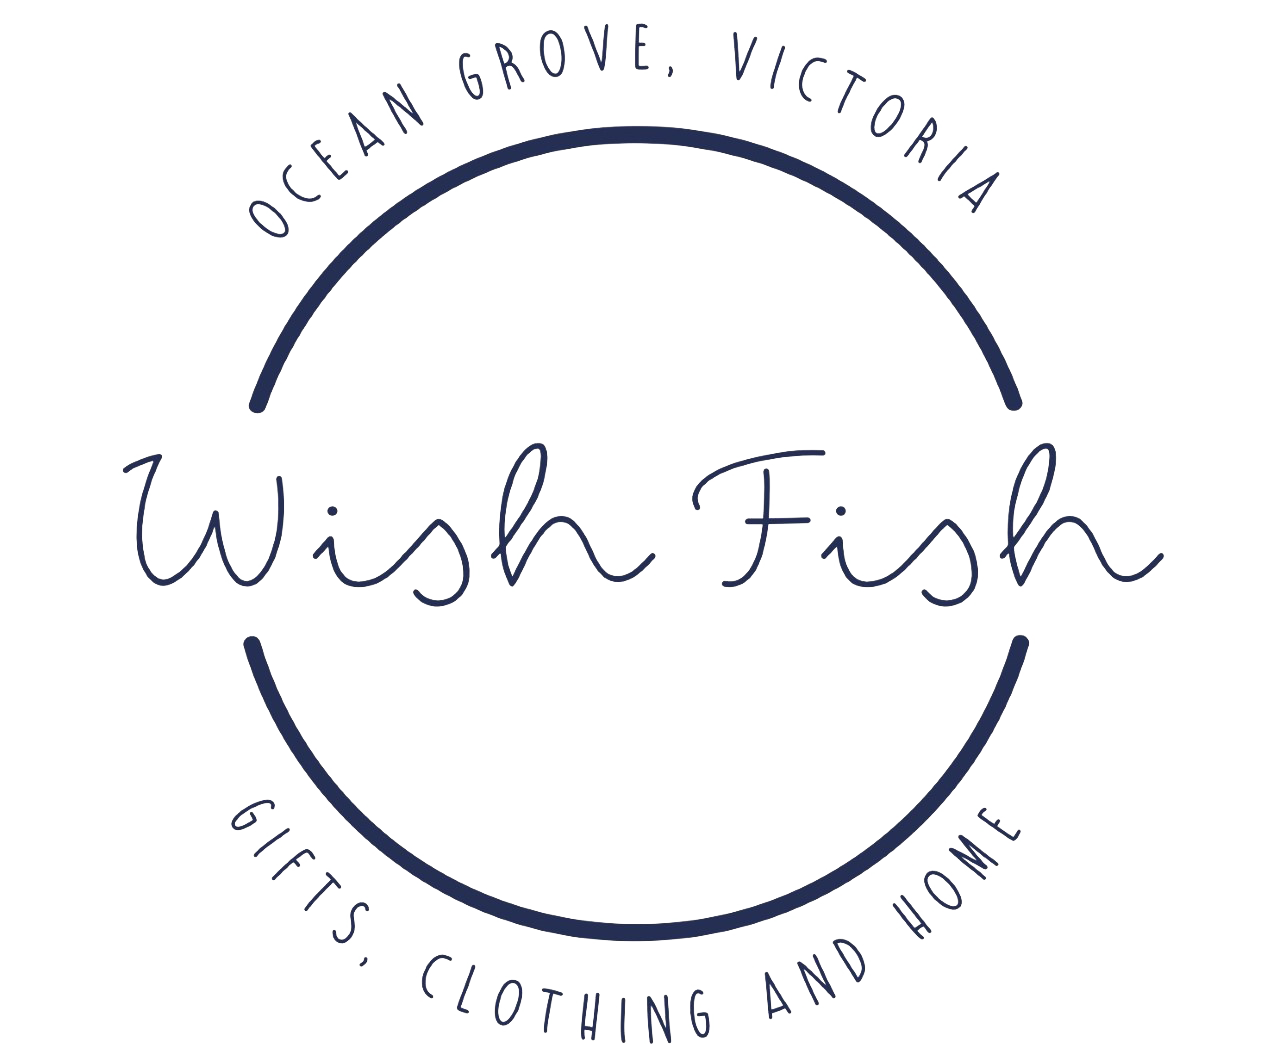 Wish Fish Gifts Ocean Grove